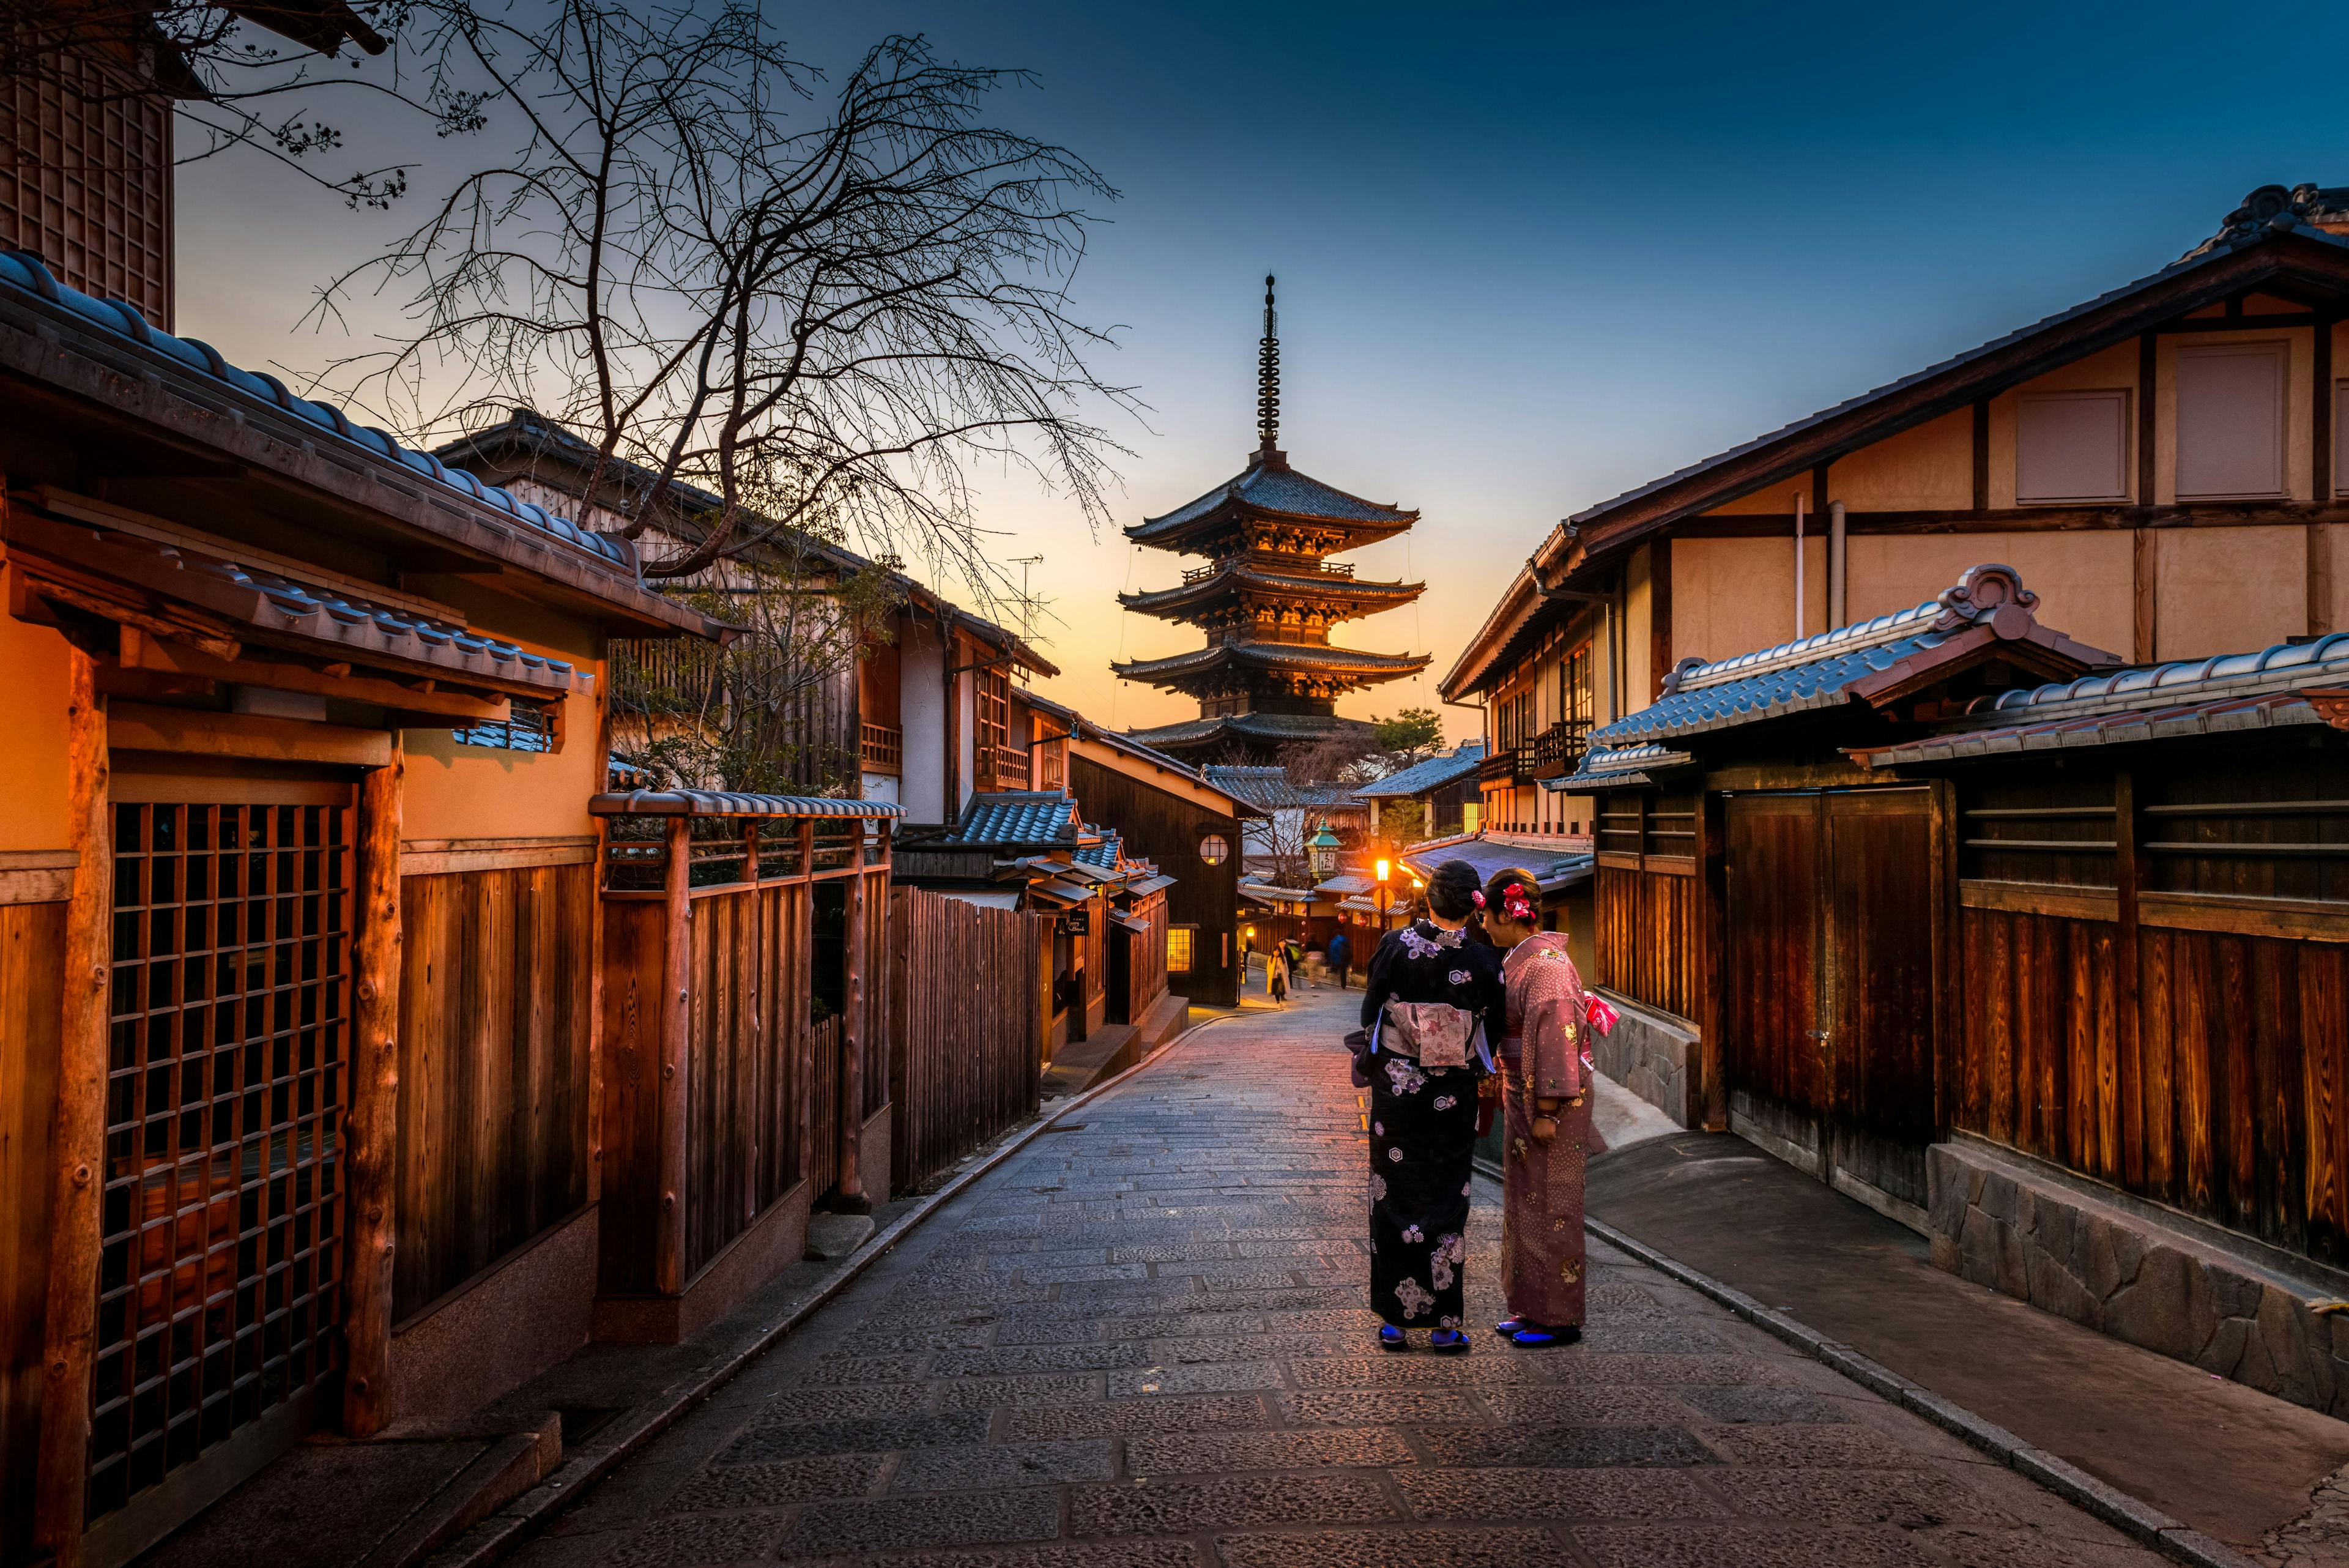 RatePunk recommends Japan for senior travelers